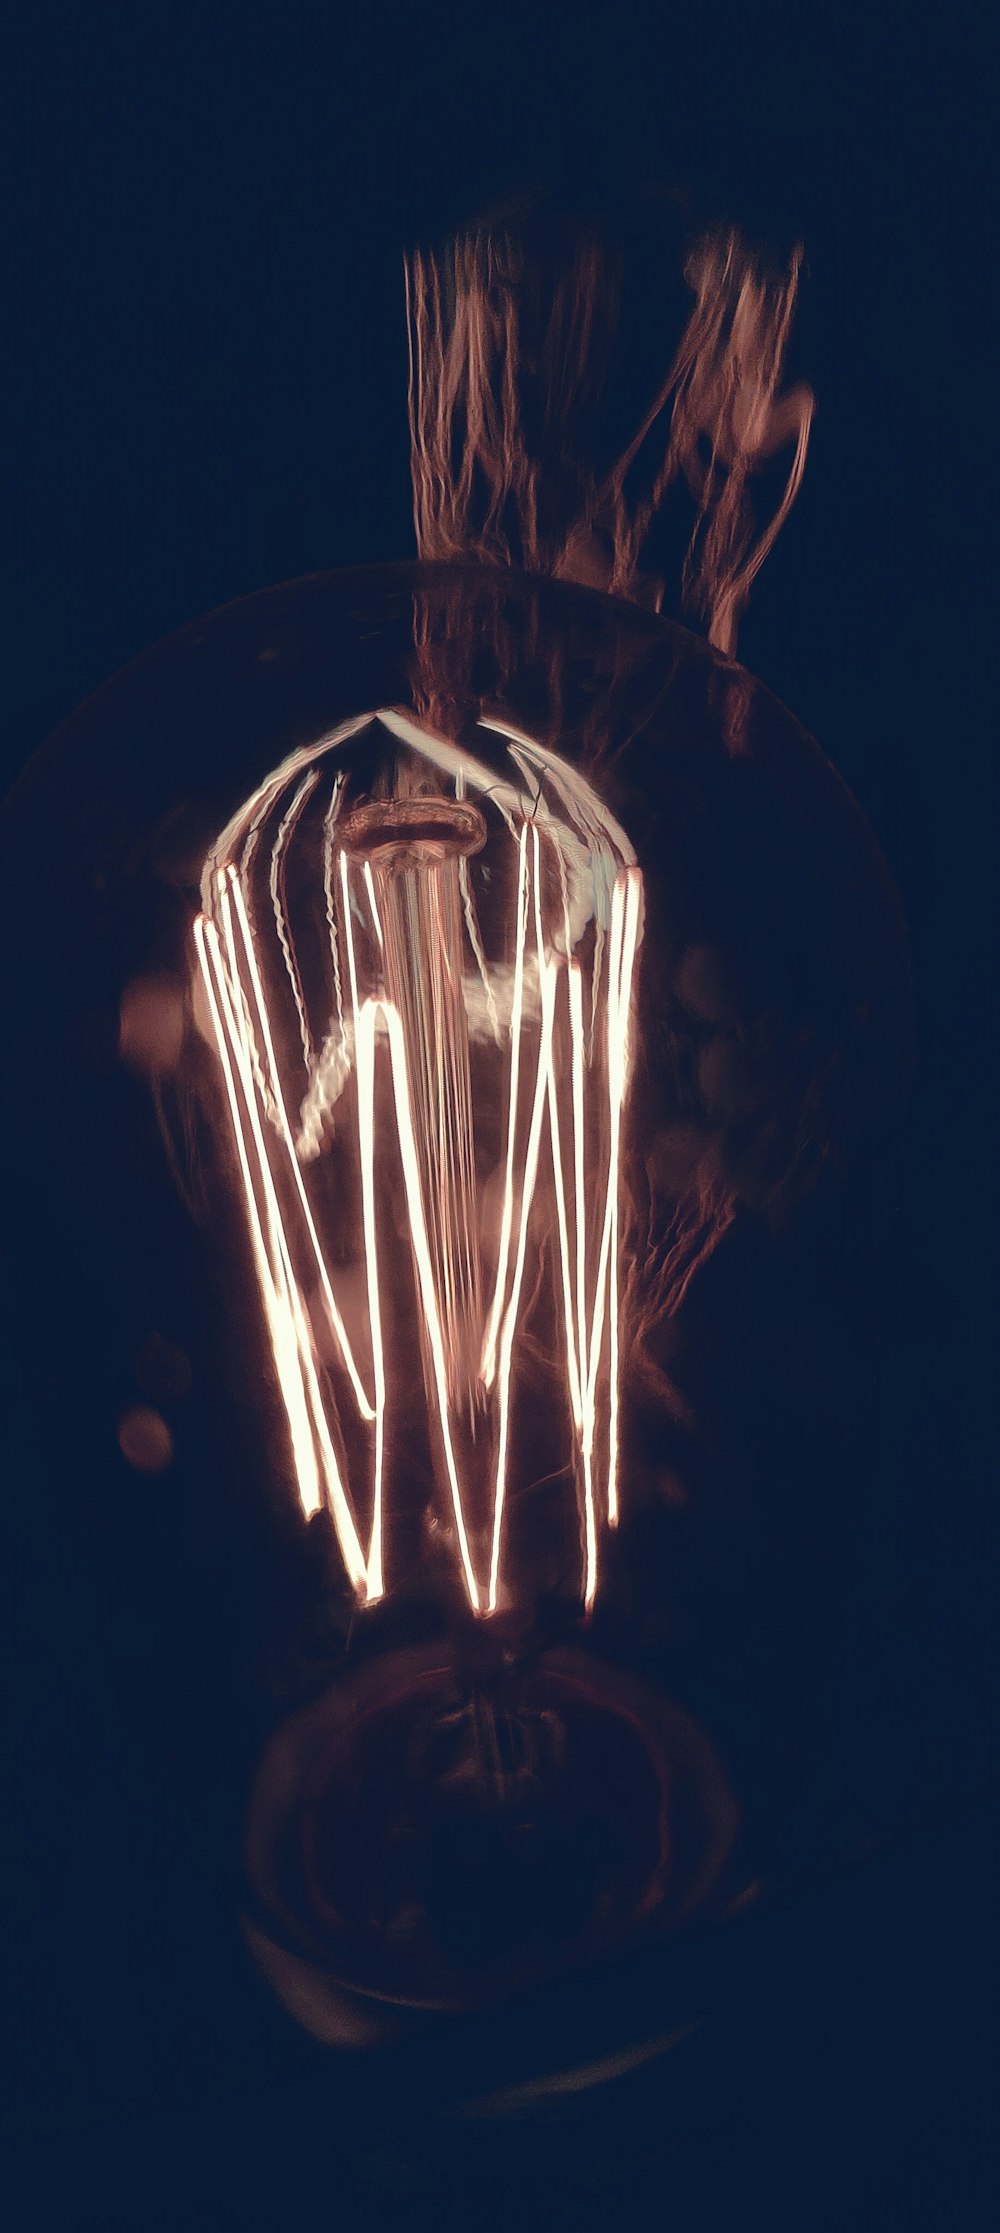 Una foto borrosa de una bombilla en la oscuridad